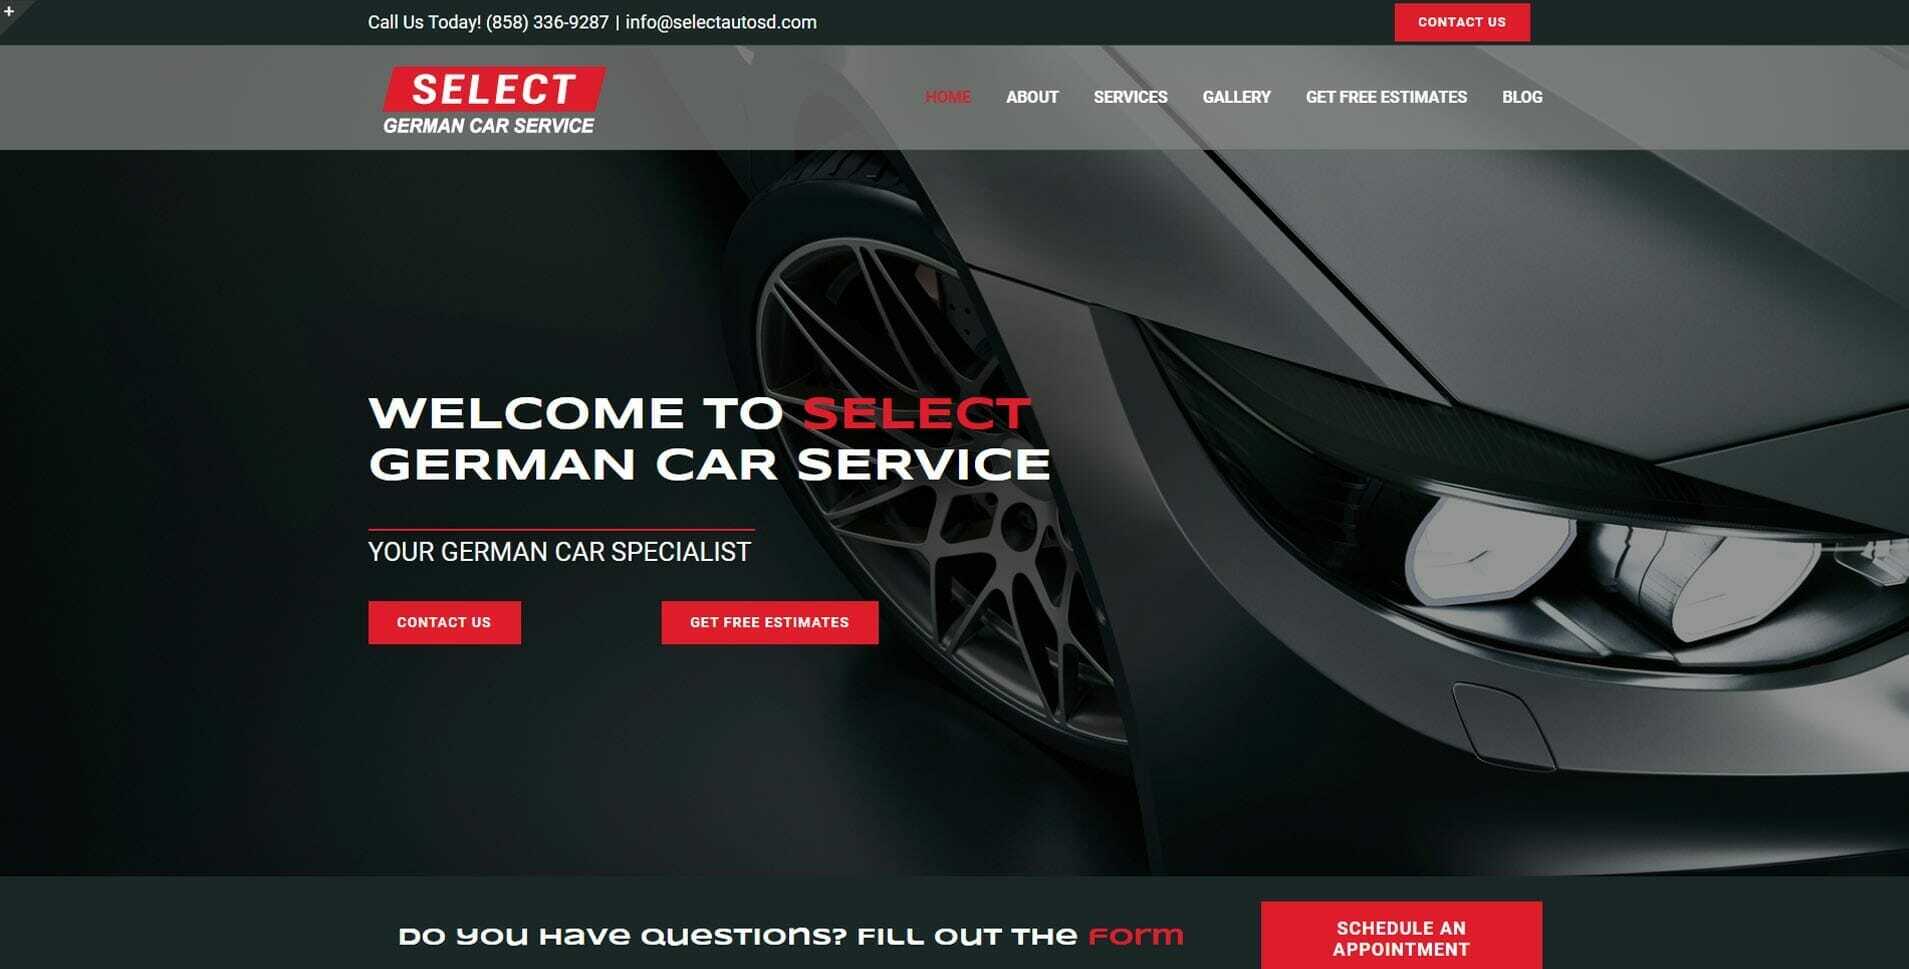 Select German Car Service website